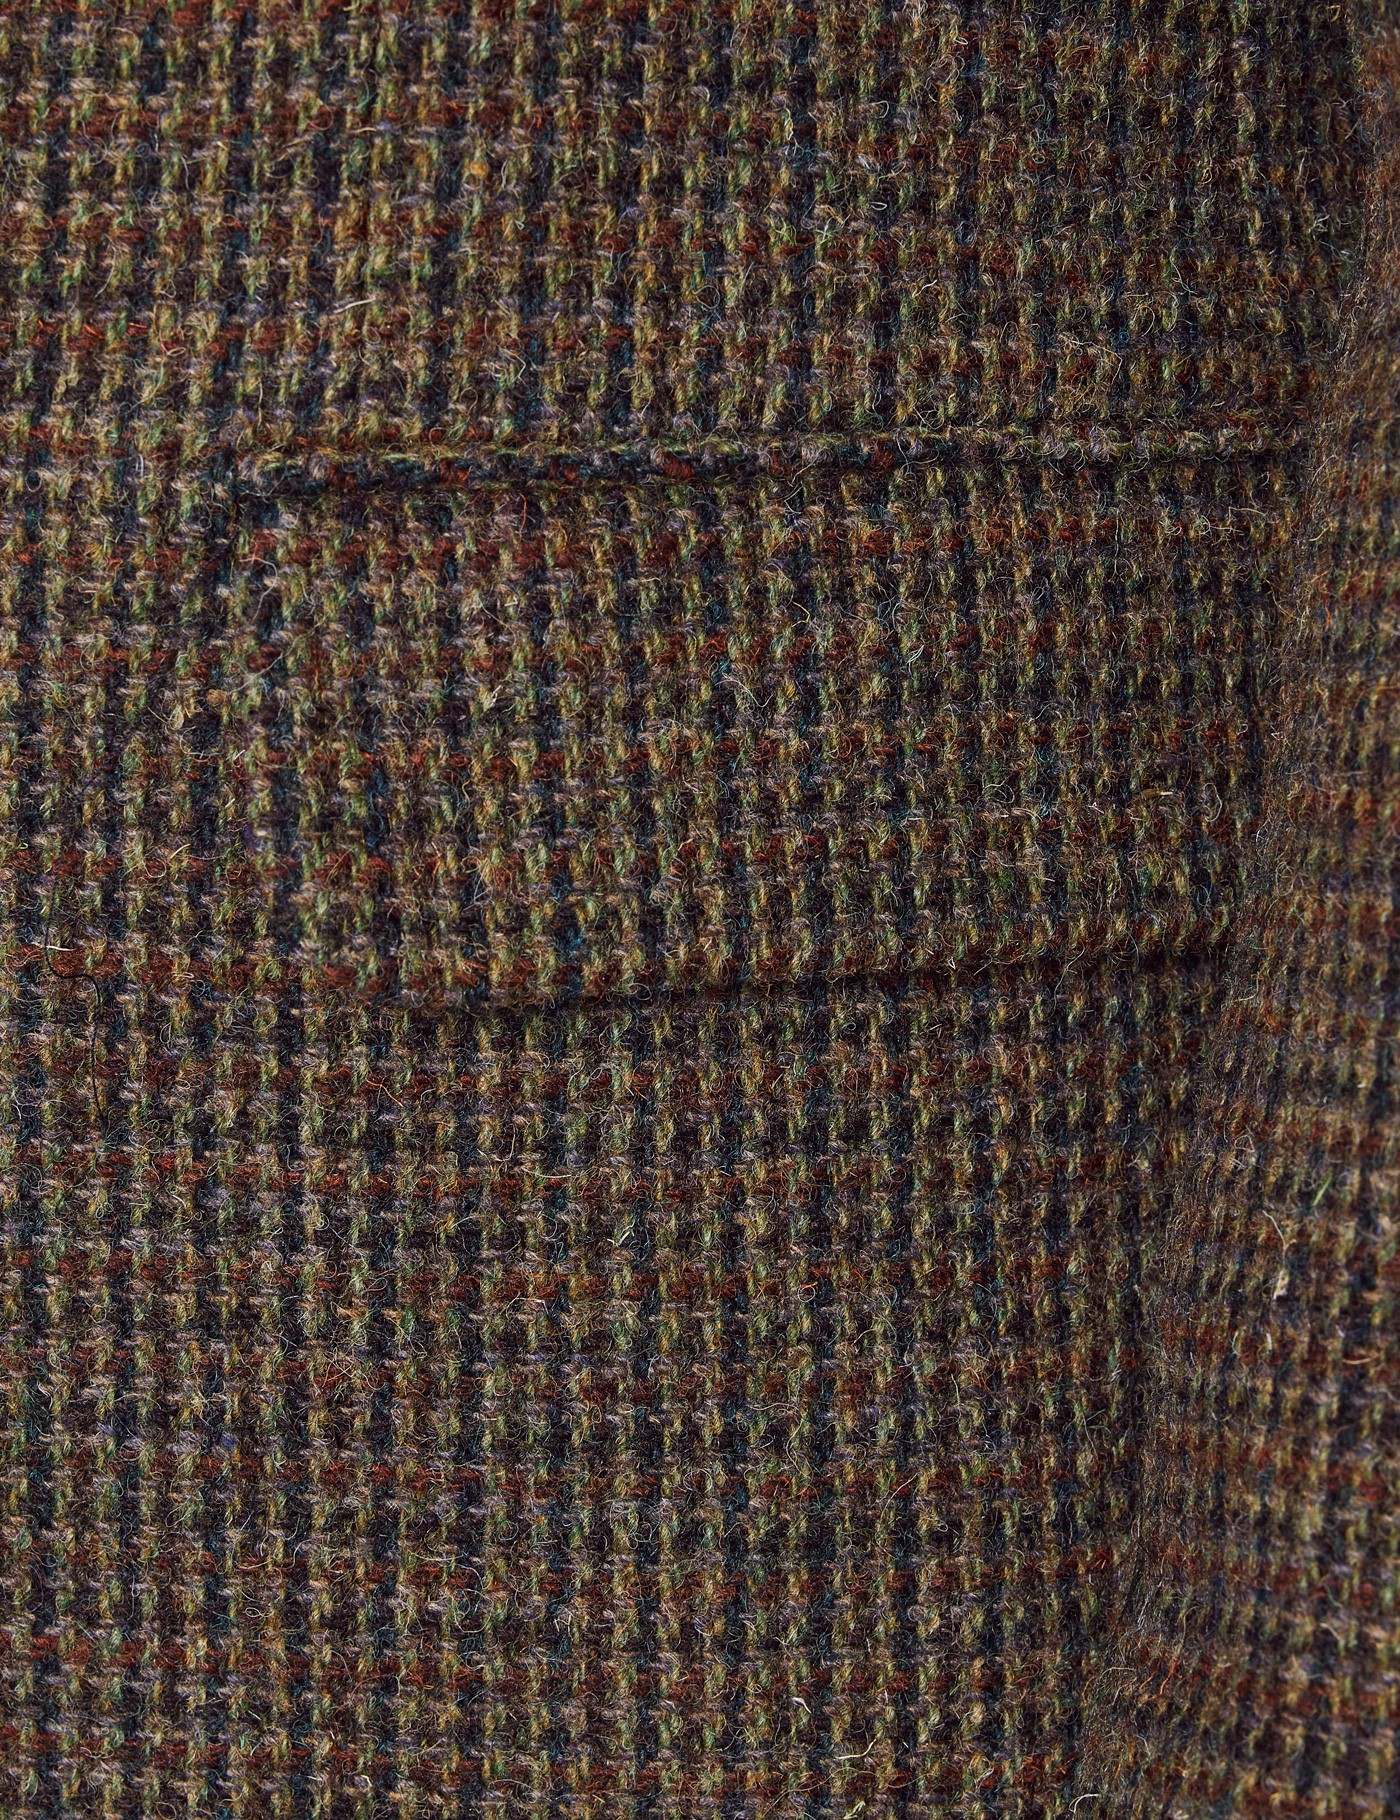 Men's Green & Brown Check Tweed Blazer | Hawes & Curtis